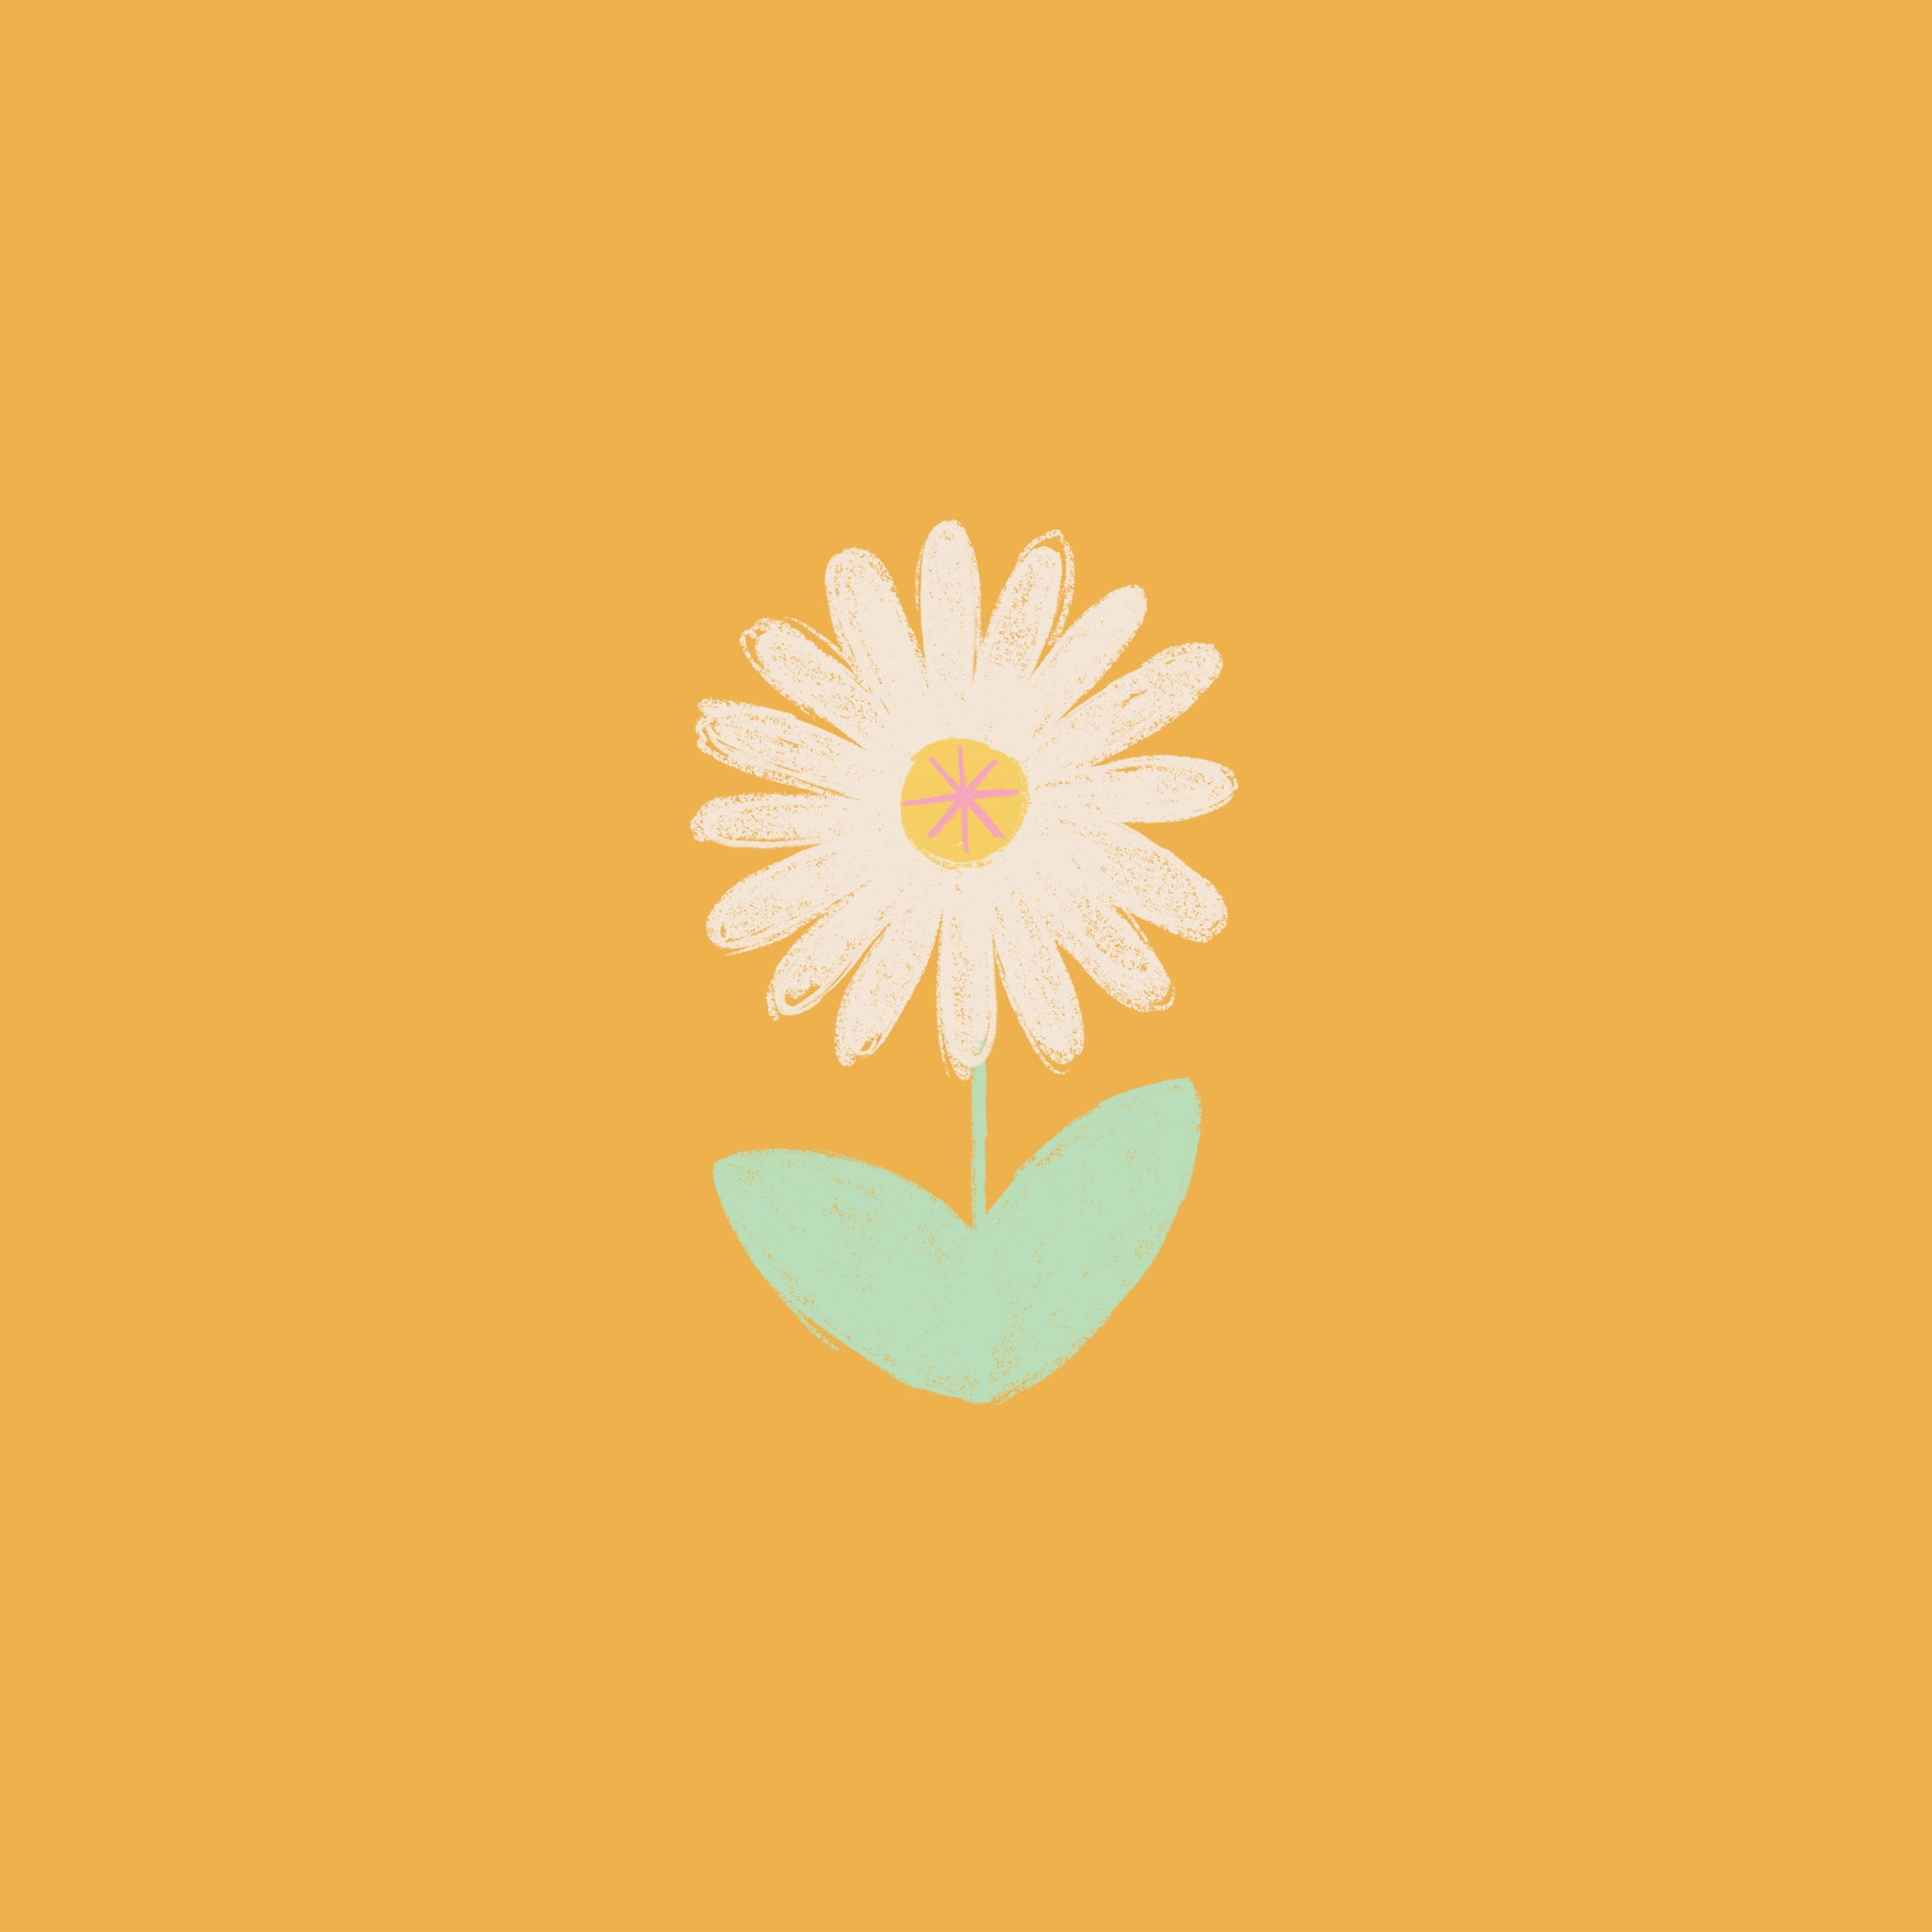 Illustrated daisy on mustard background tablet wallpaper